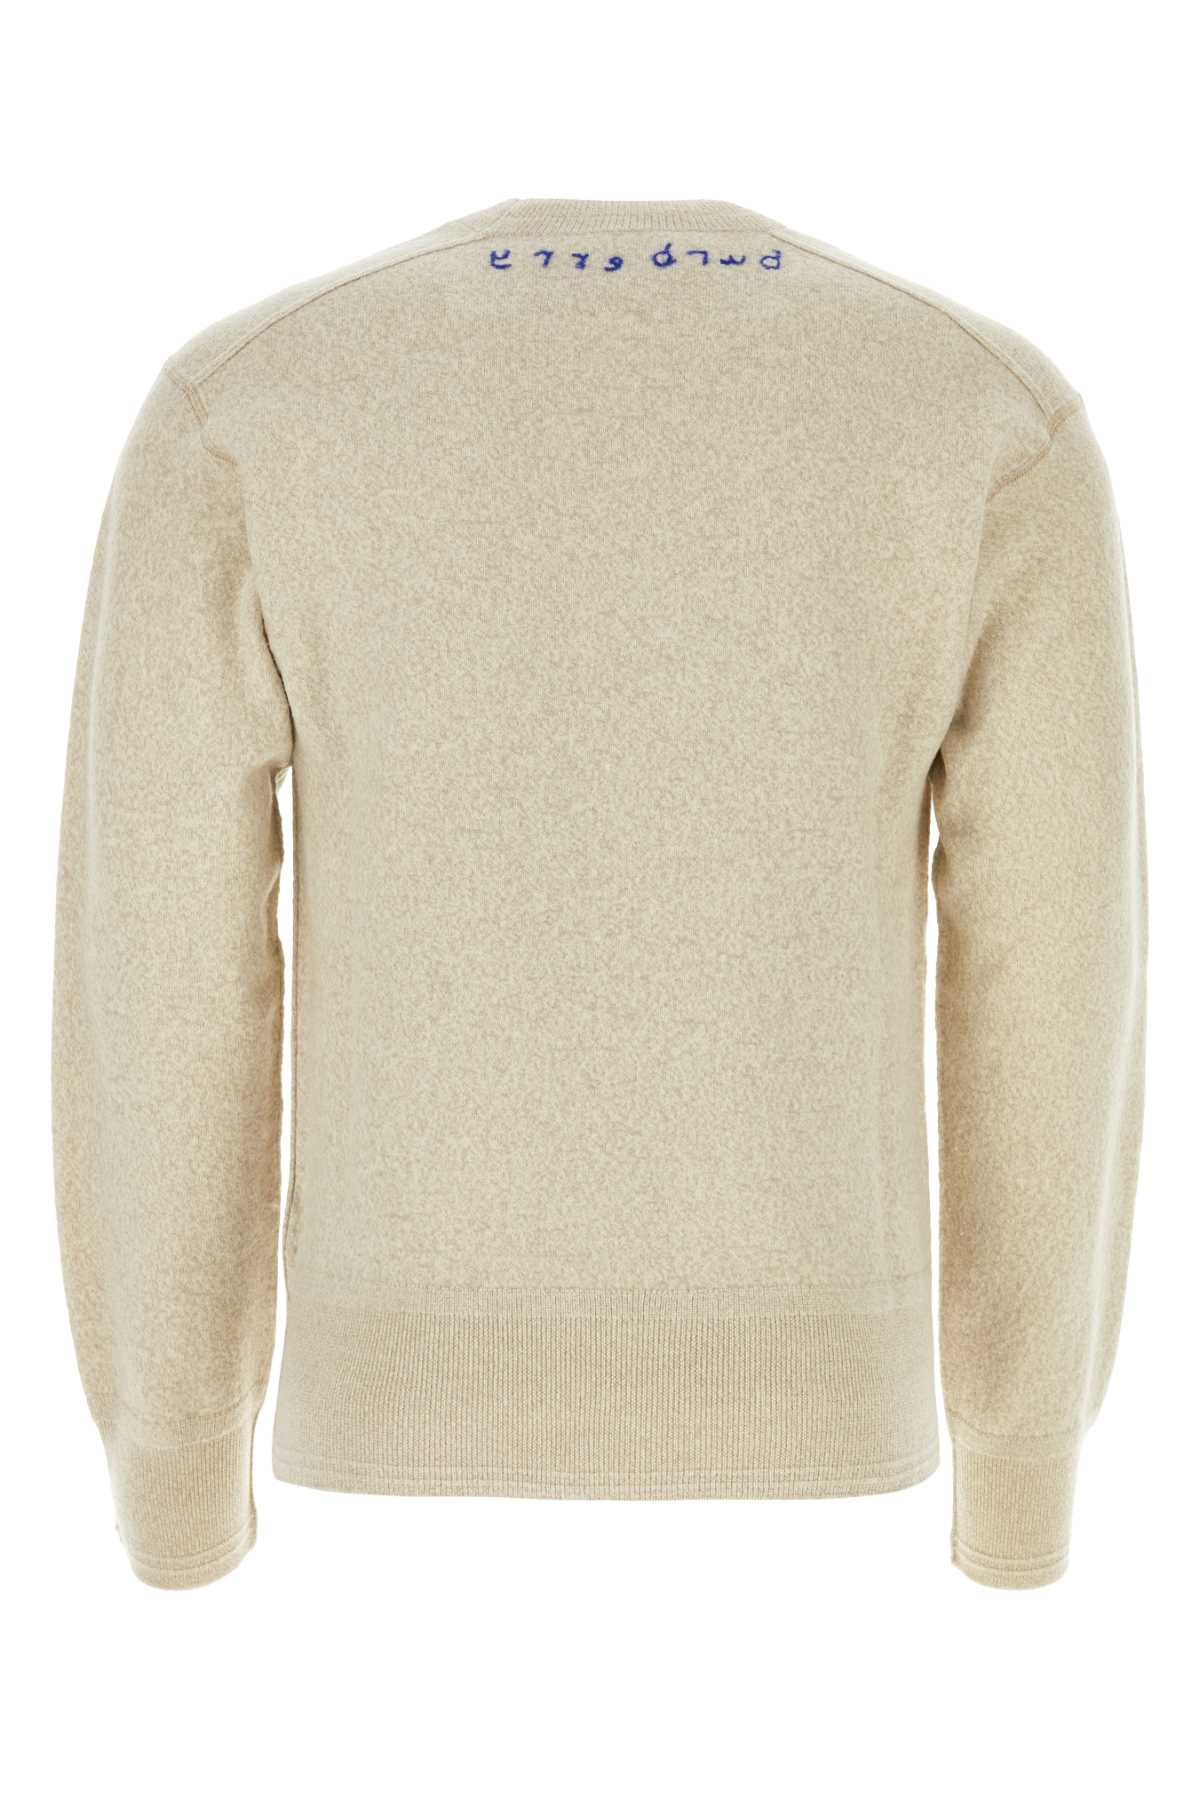 Burberry Melange Sand Wool Sweater In Wheat